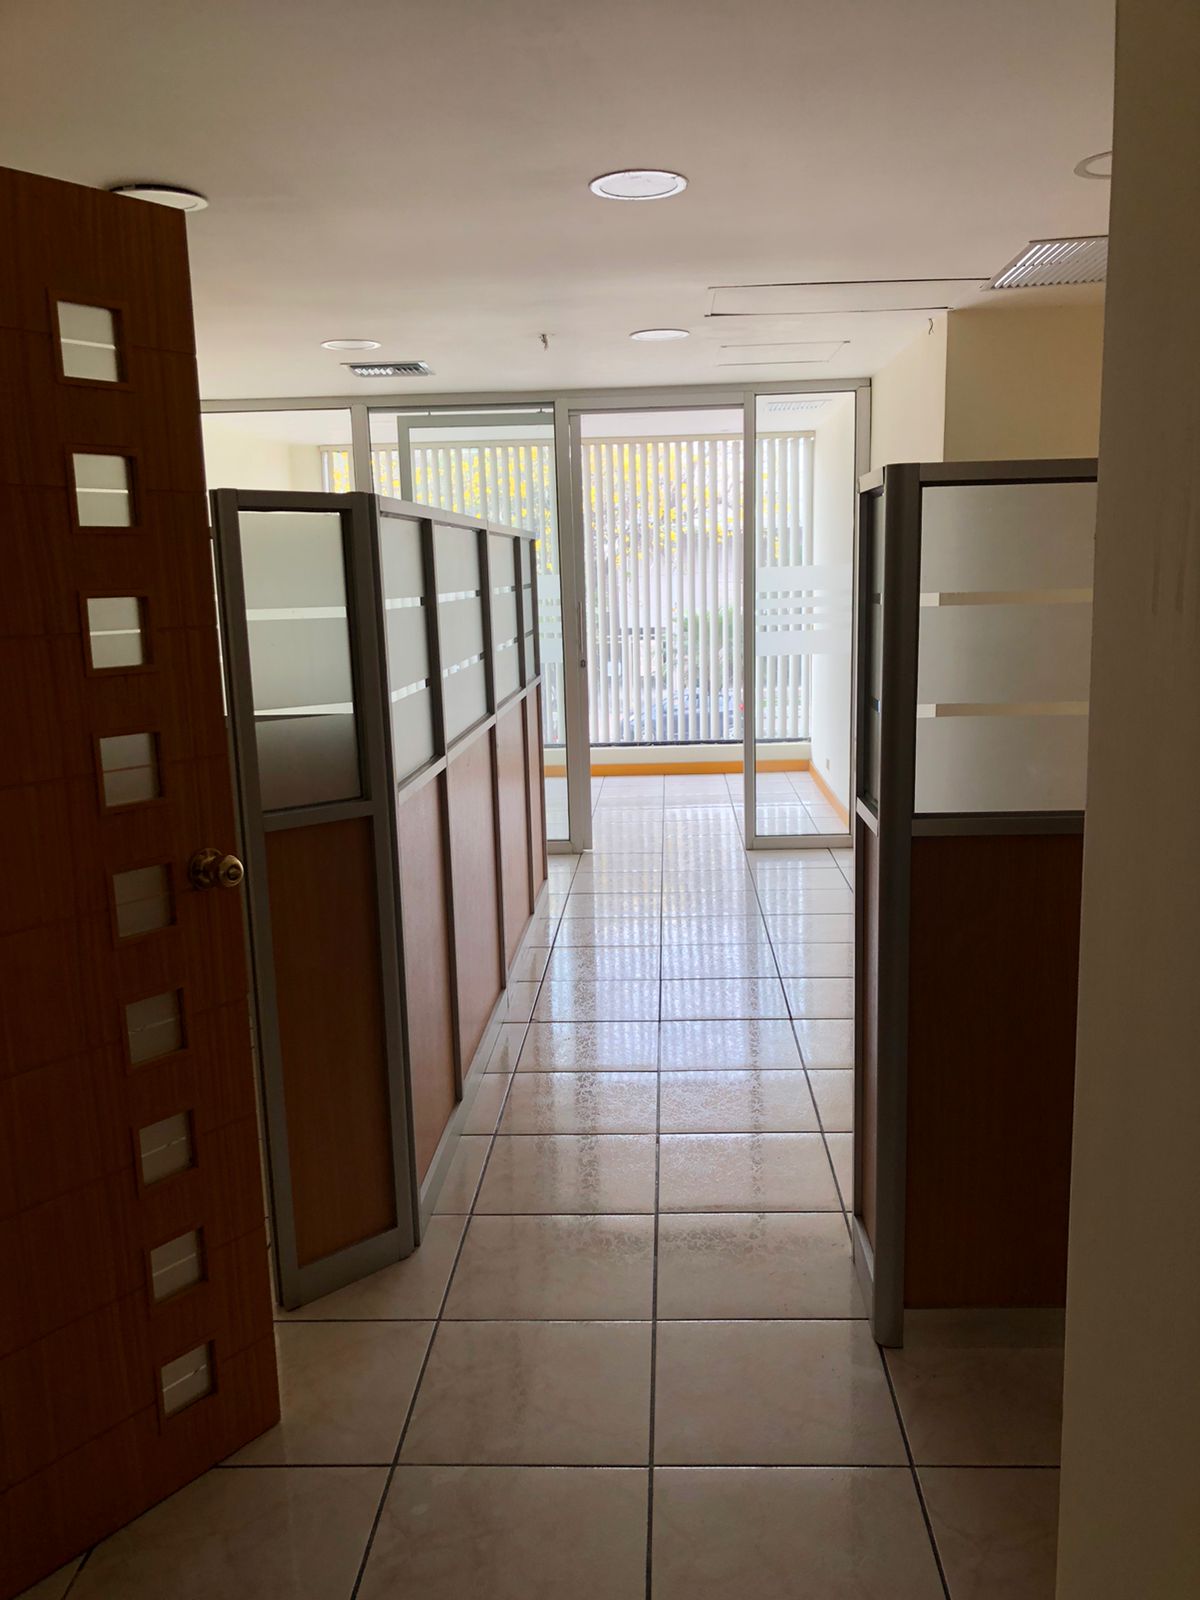 Alquiler Oficina URDESA CENTRAL, Guayaquil: 235m2